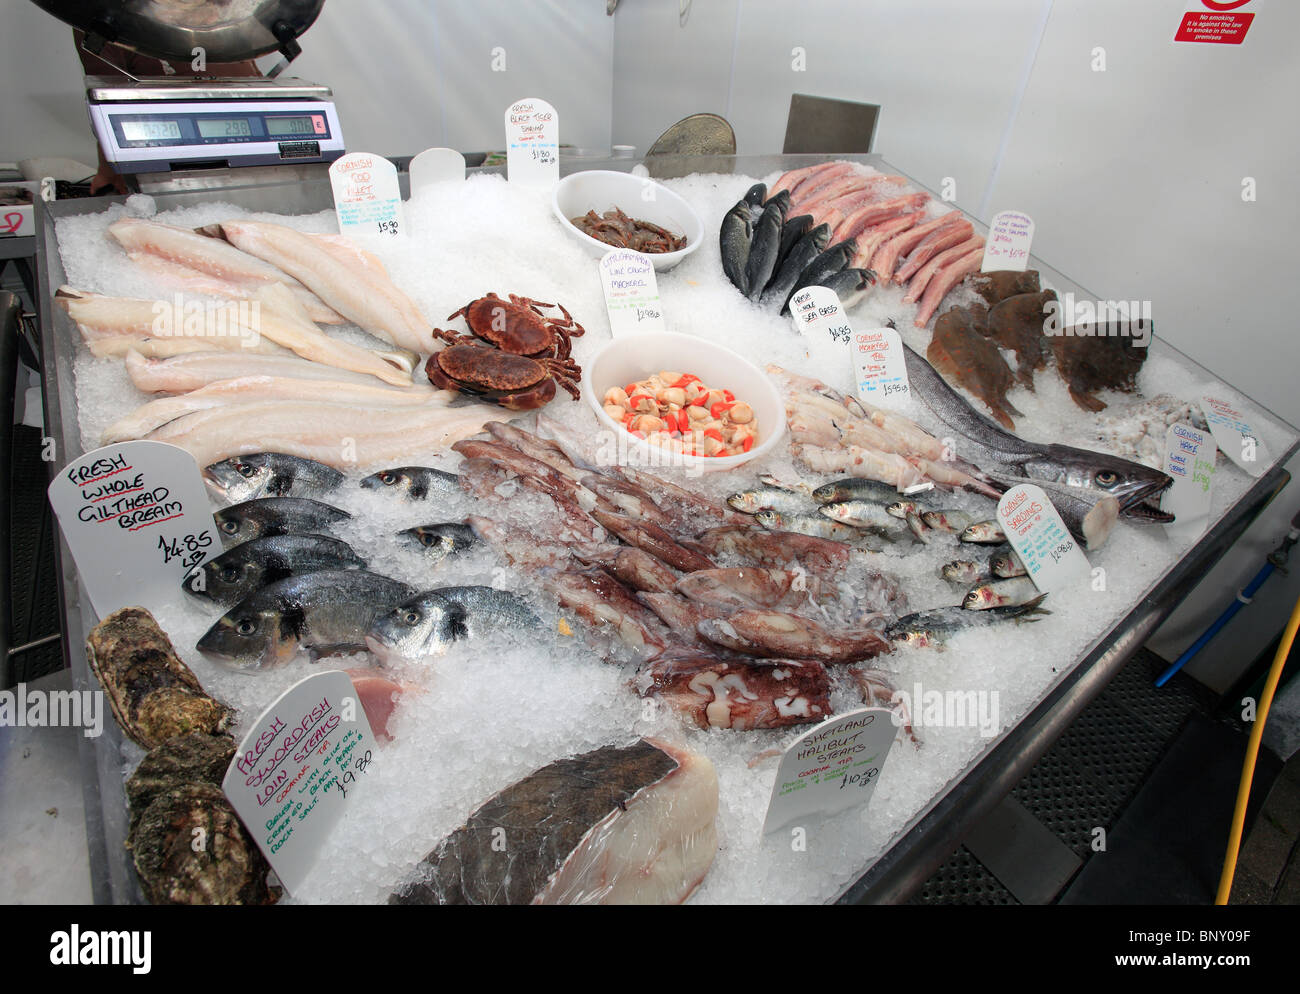 united kingdom littlehampton a wet fish display in a fishmongers stall Stock Photo